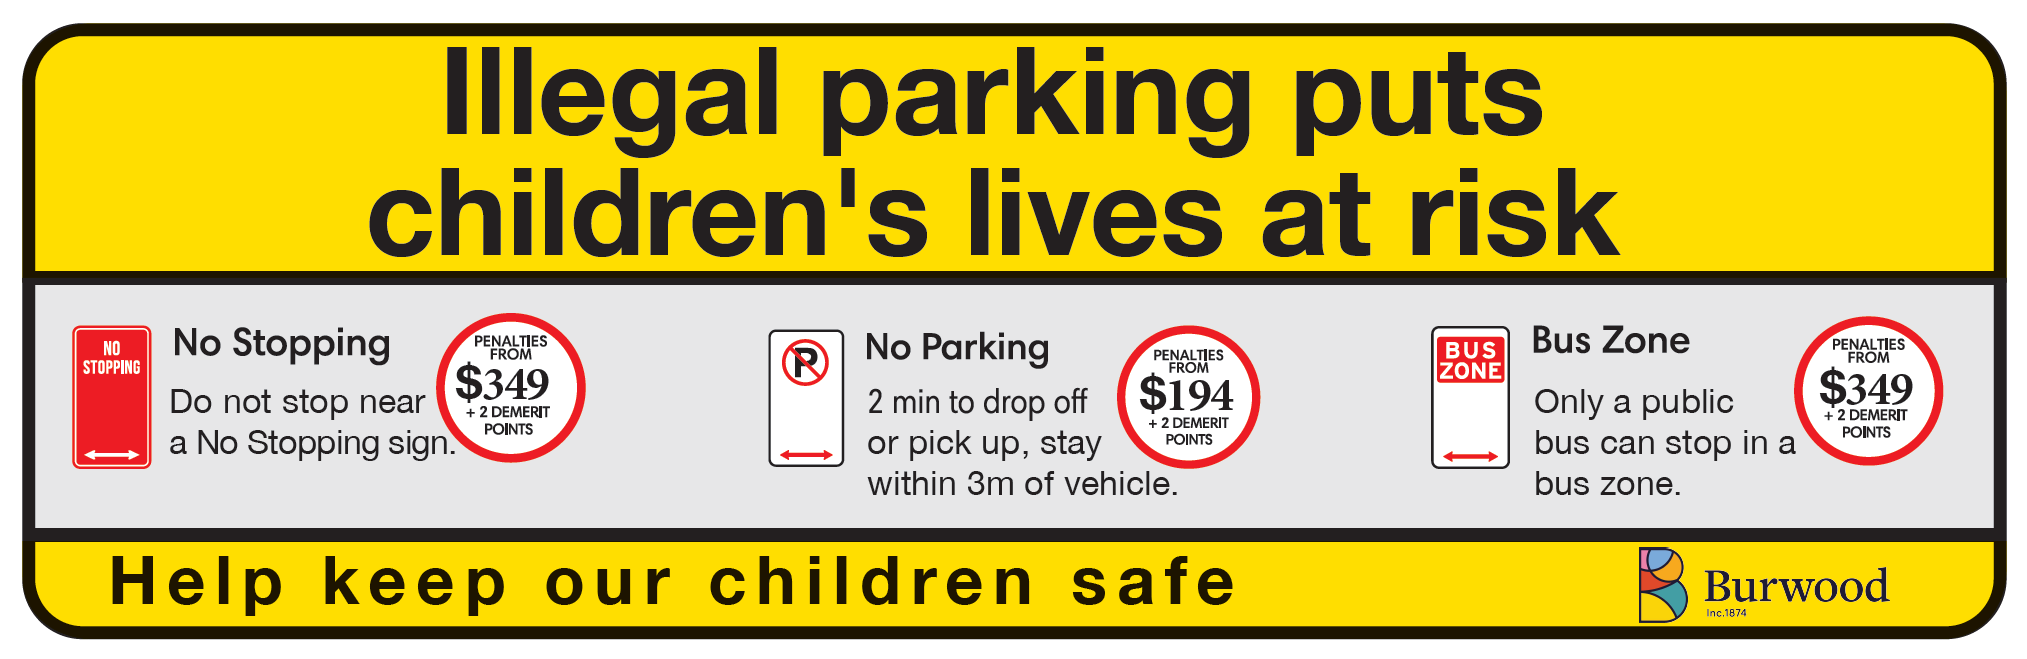 illegal parking puts childrens lives at risk